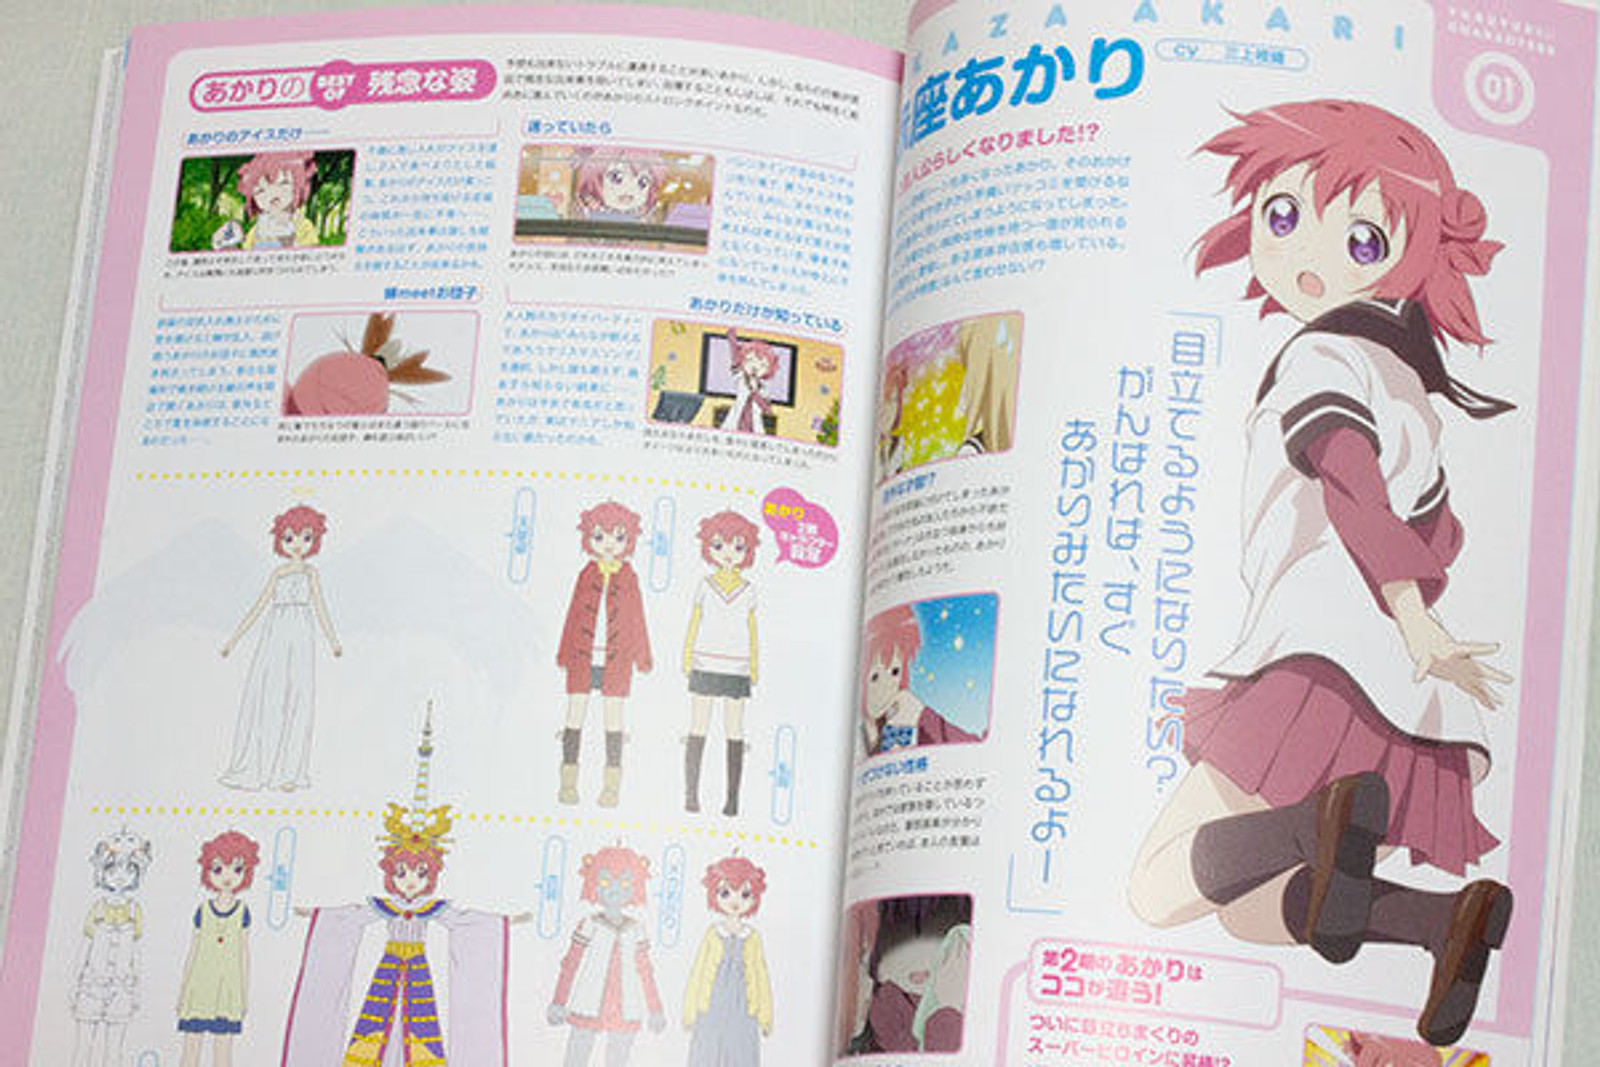 Yuru Yuri TV Animation Official Fan Book illustration Art JAPAN ANIME MANGA